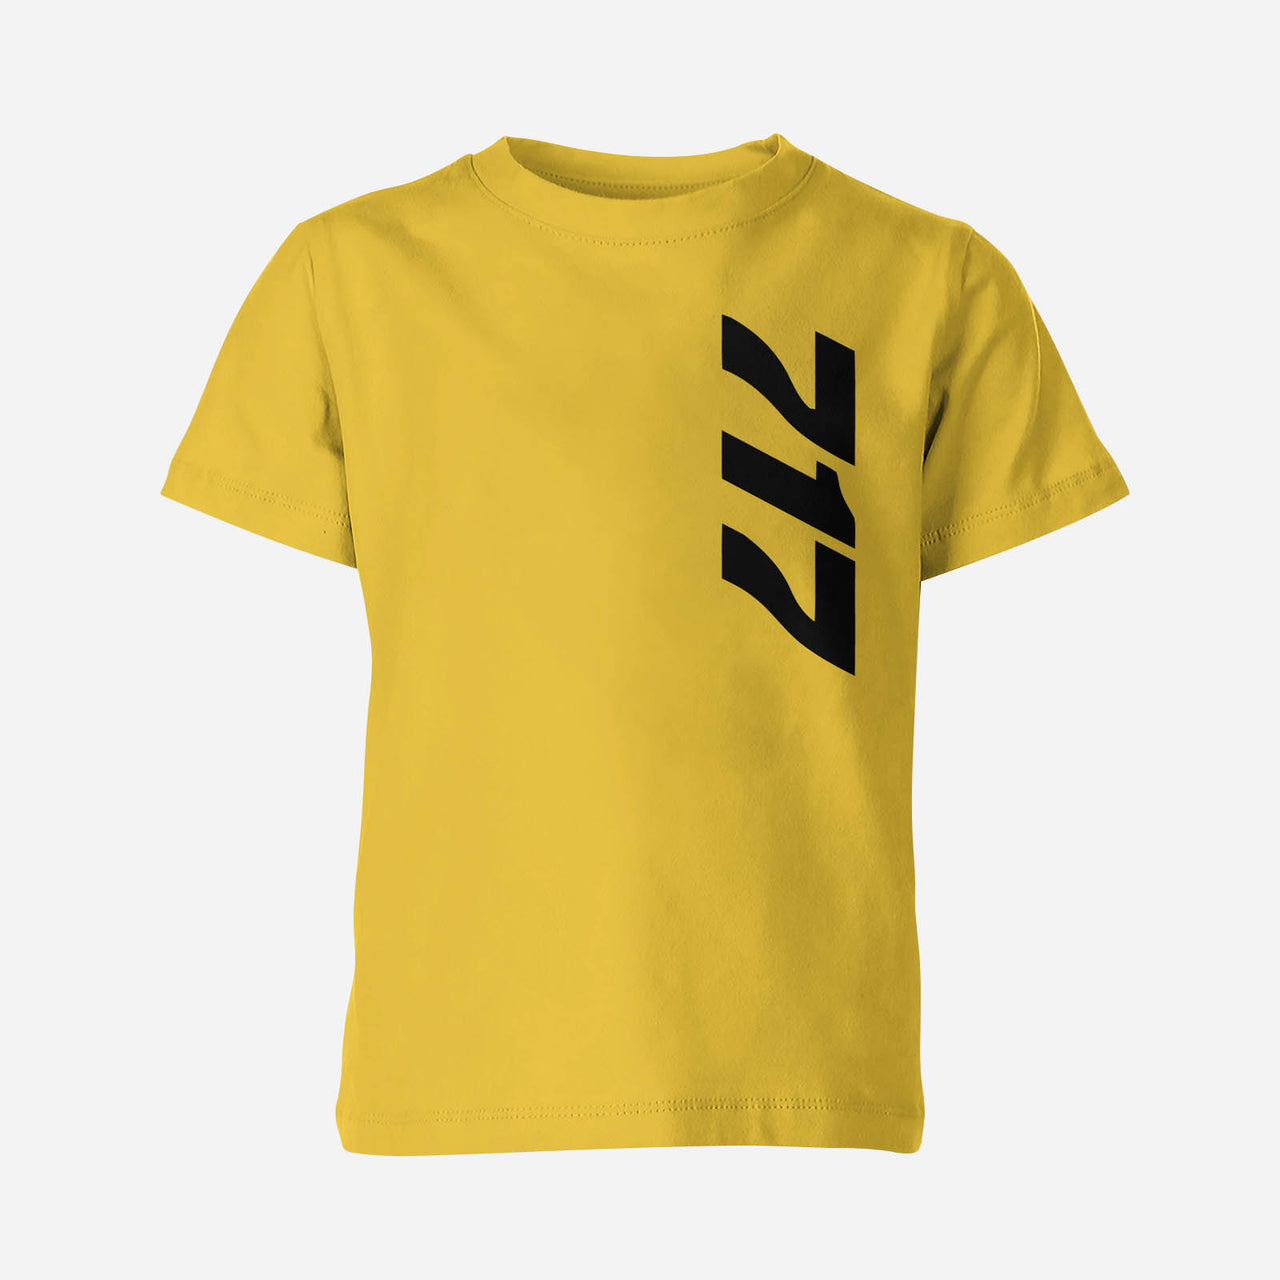 717 Side Text Designed Children T-Shirts